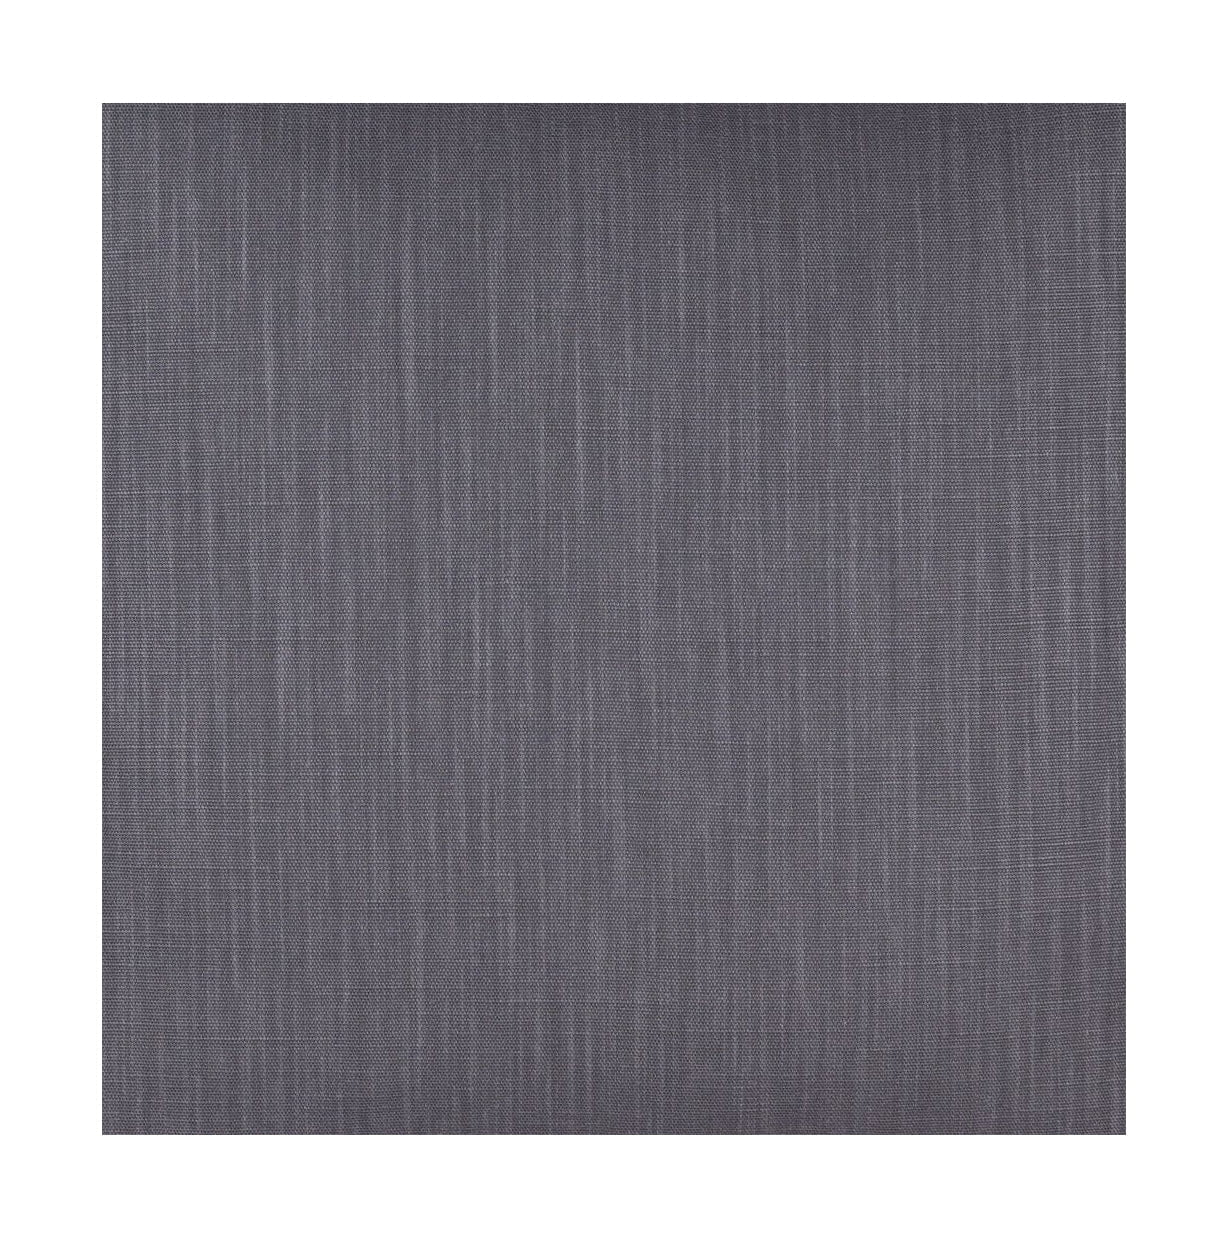 Spira Klotz Fabric Width 150 Cm (Price Per Meter), Grey